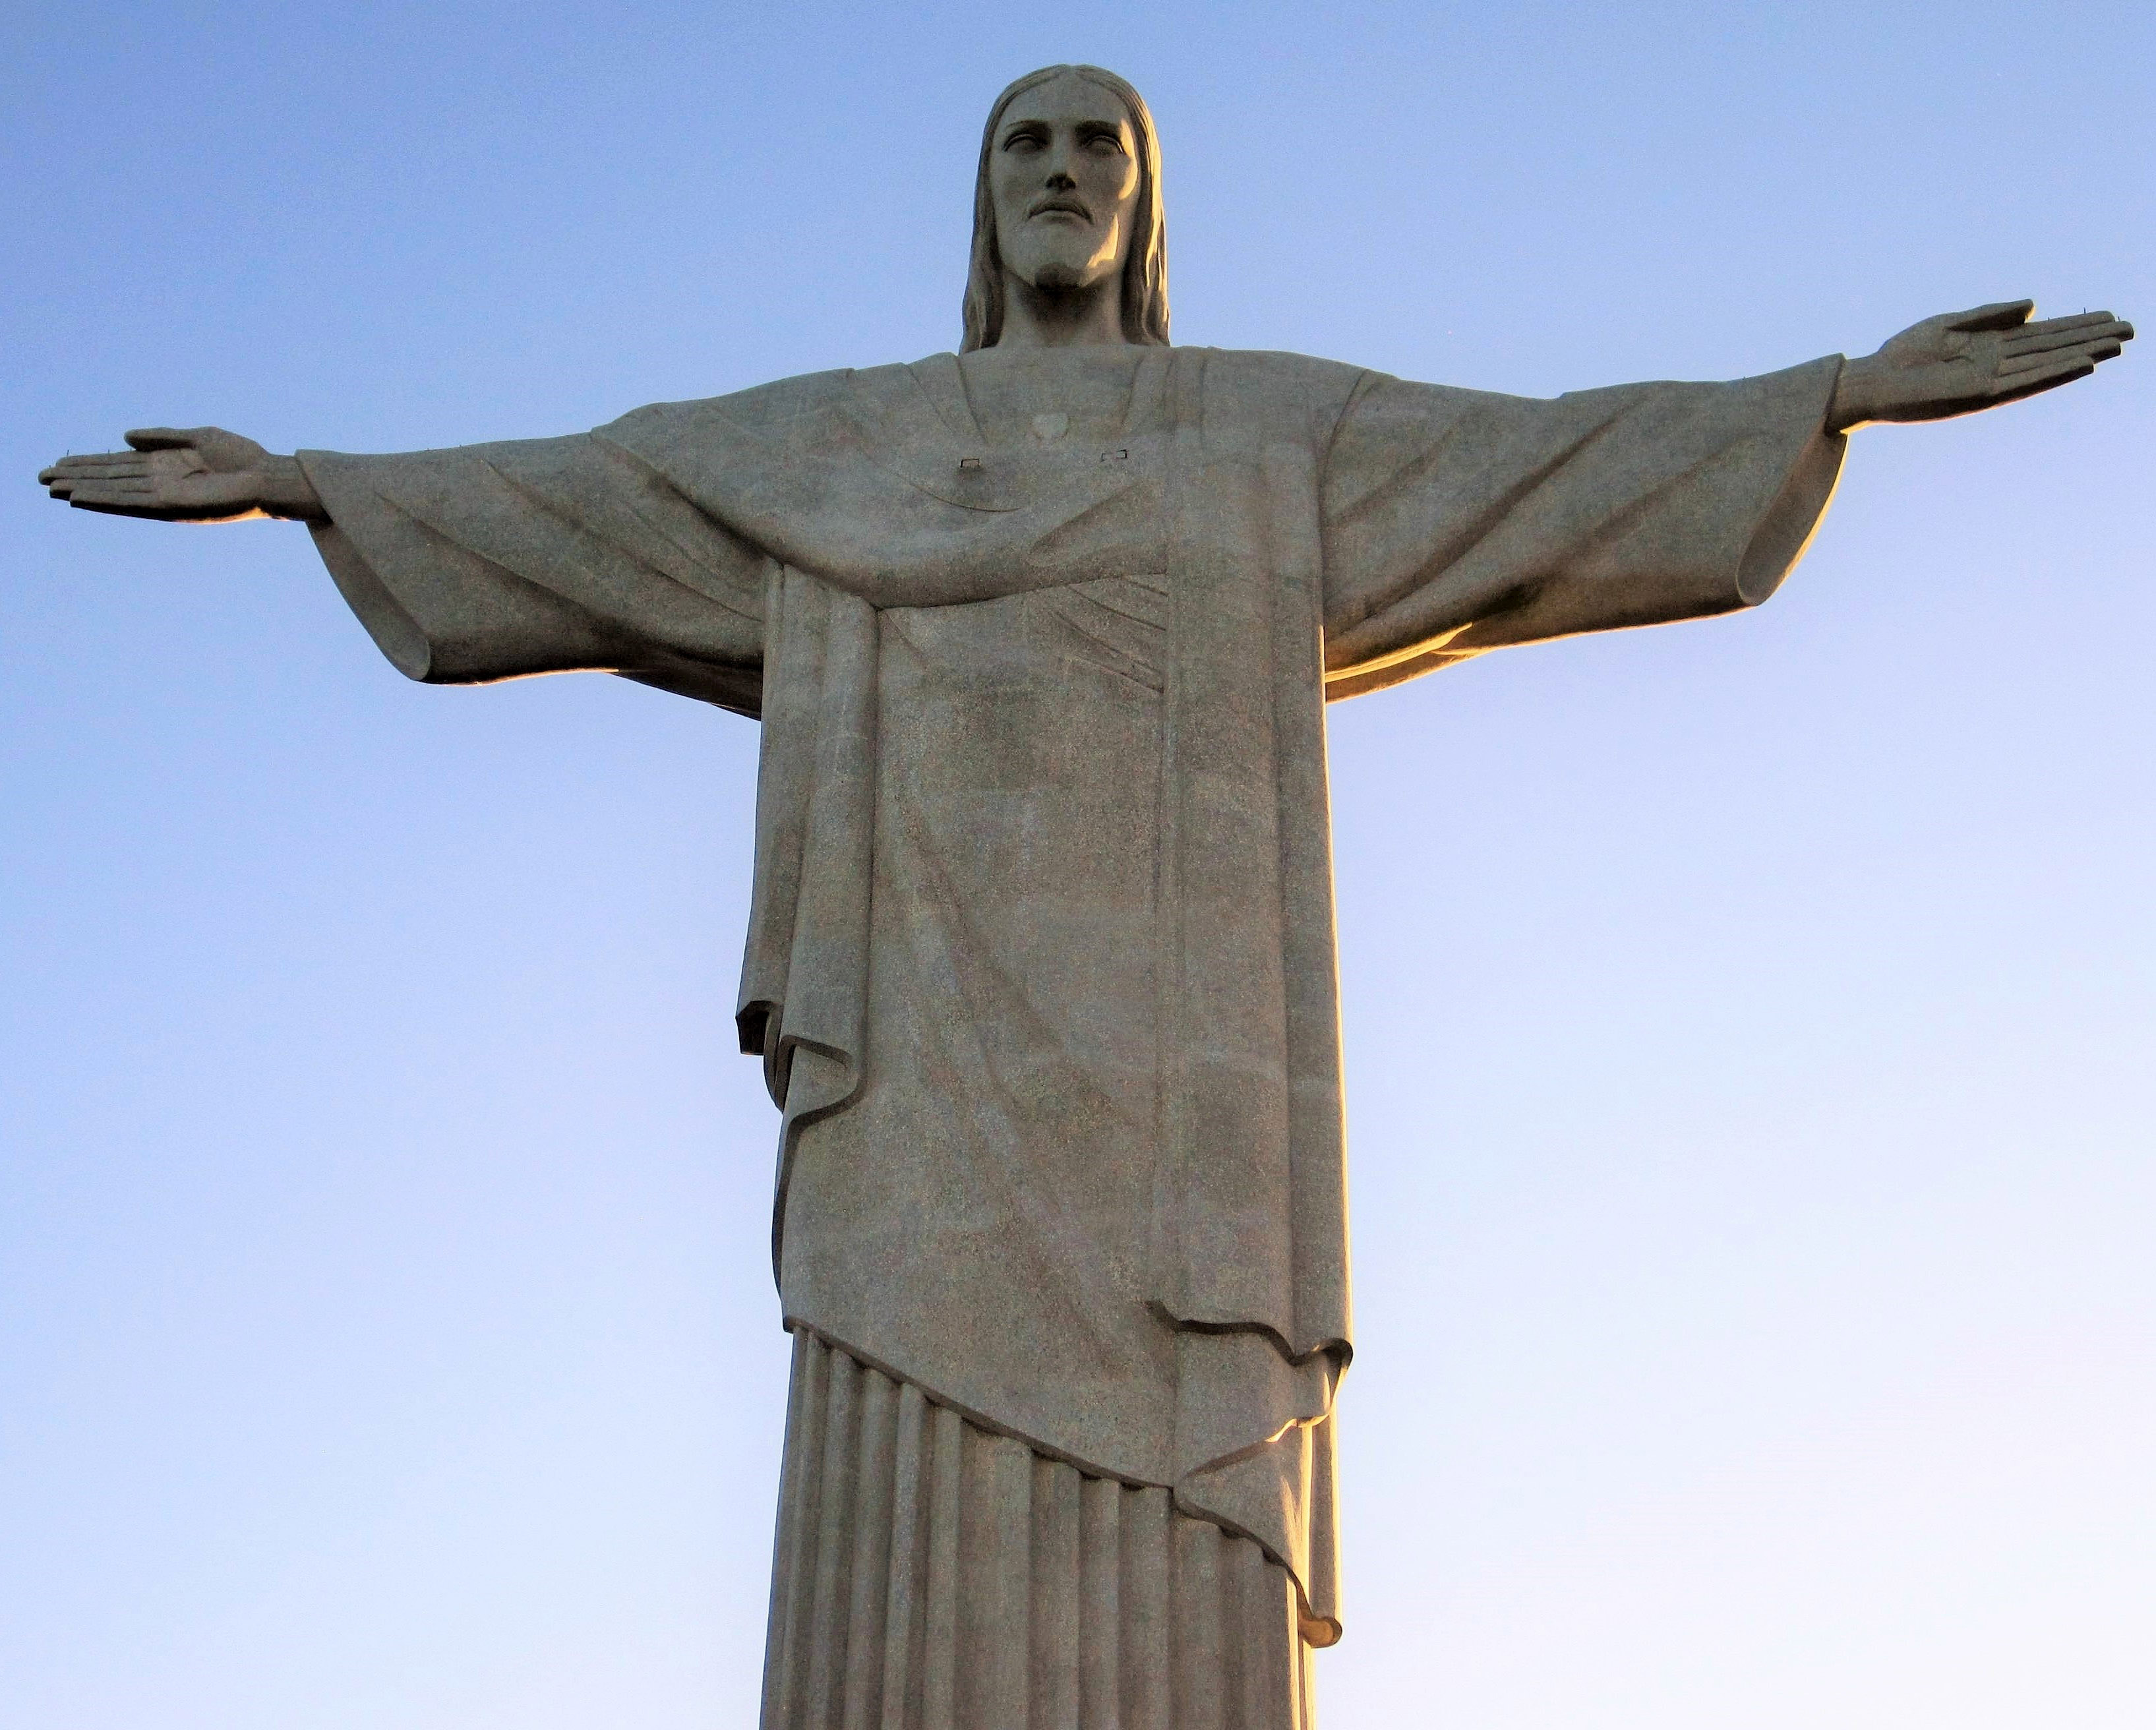 Cristo Redentor, Christ the Redeemer statue in Rio De Janeiro, Brazil image  - Free stock photo - Public Domain photo - CC0 Images